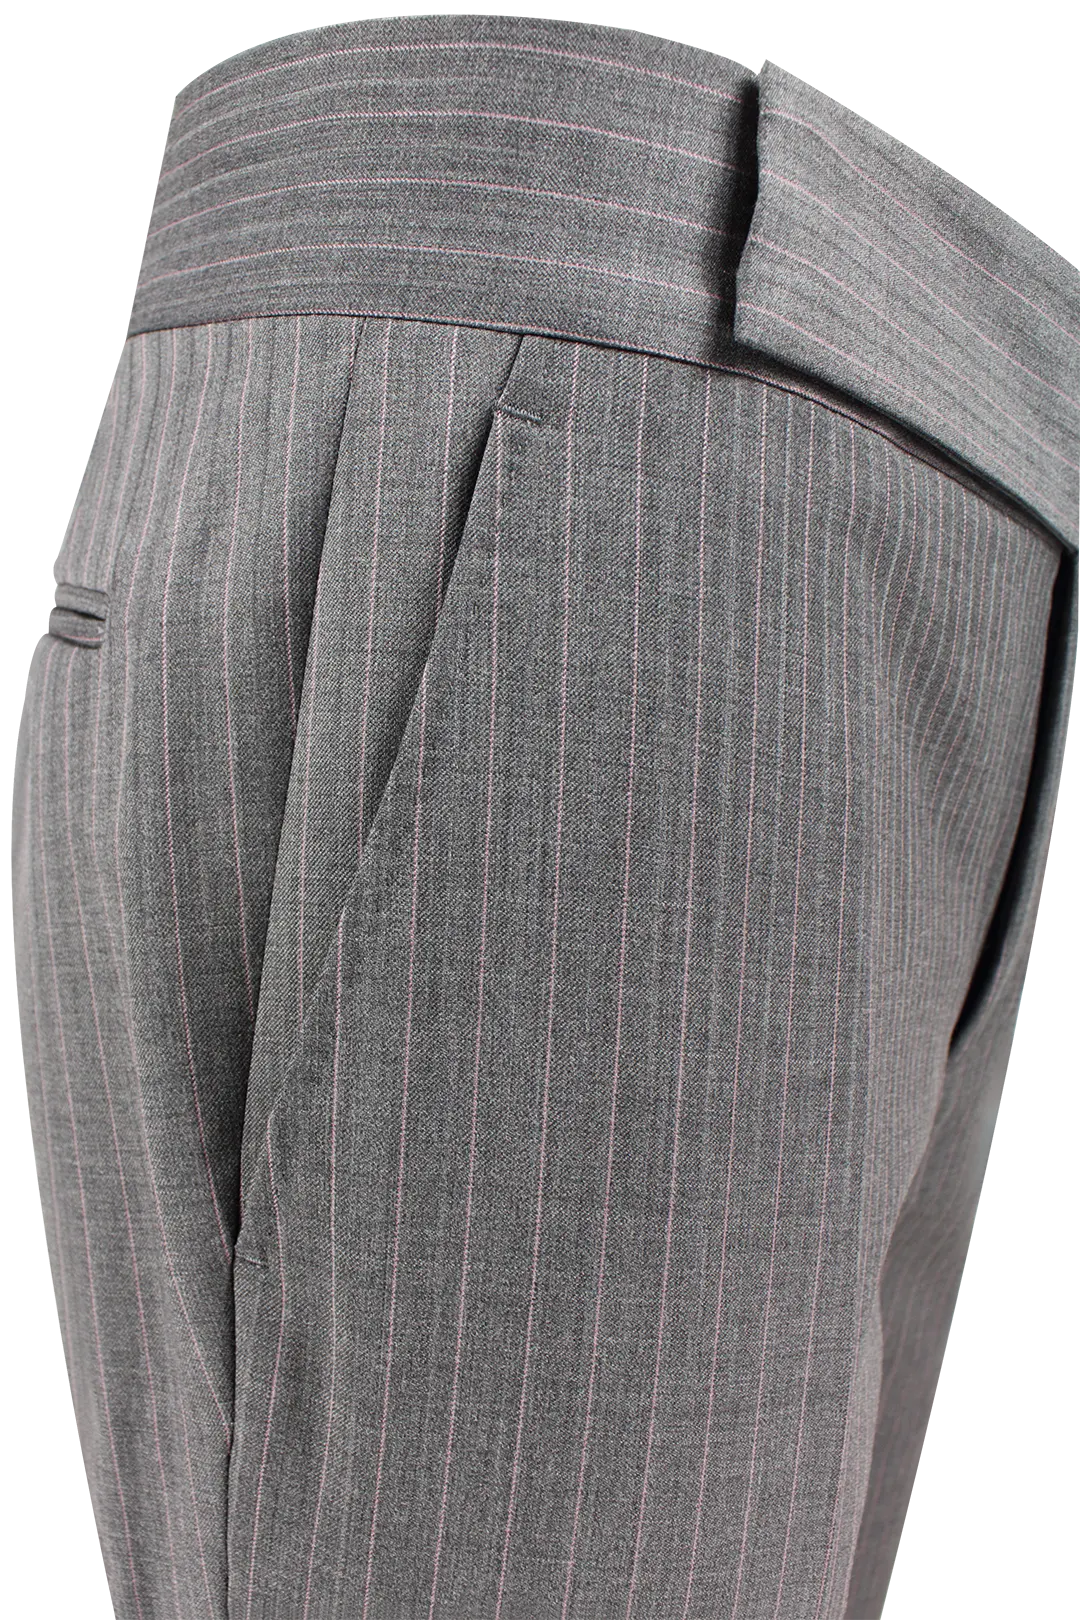 Pantalone cinta sartoriale lana grigia gessata profilo